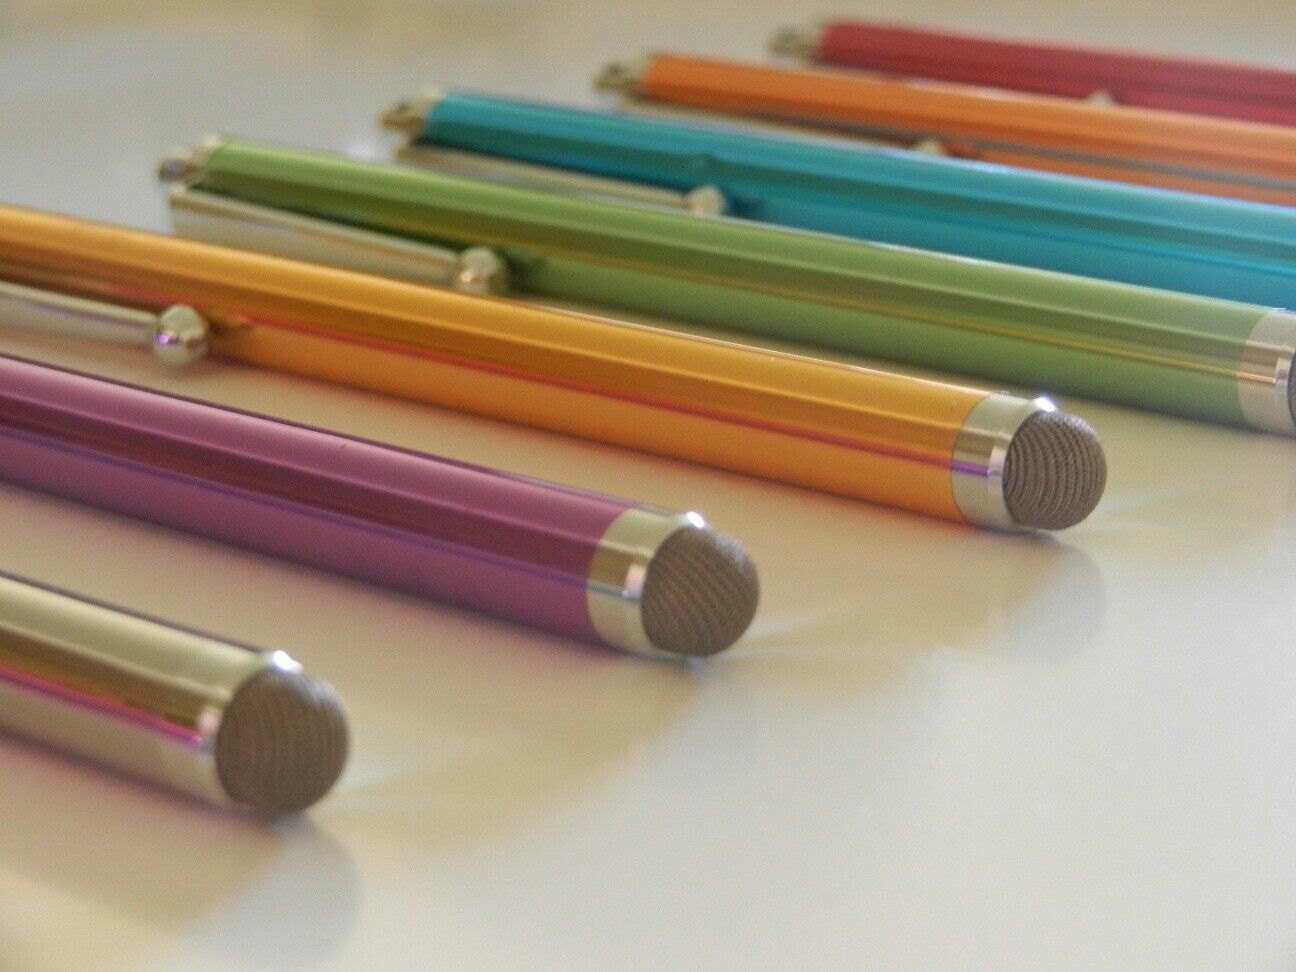 Wholesale 50 x Color Fiber Tip Metal Stylus Pen Universal iPhone iPad Galaxy